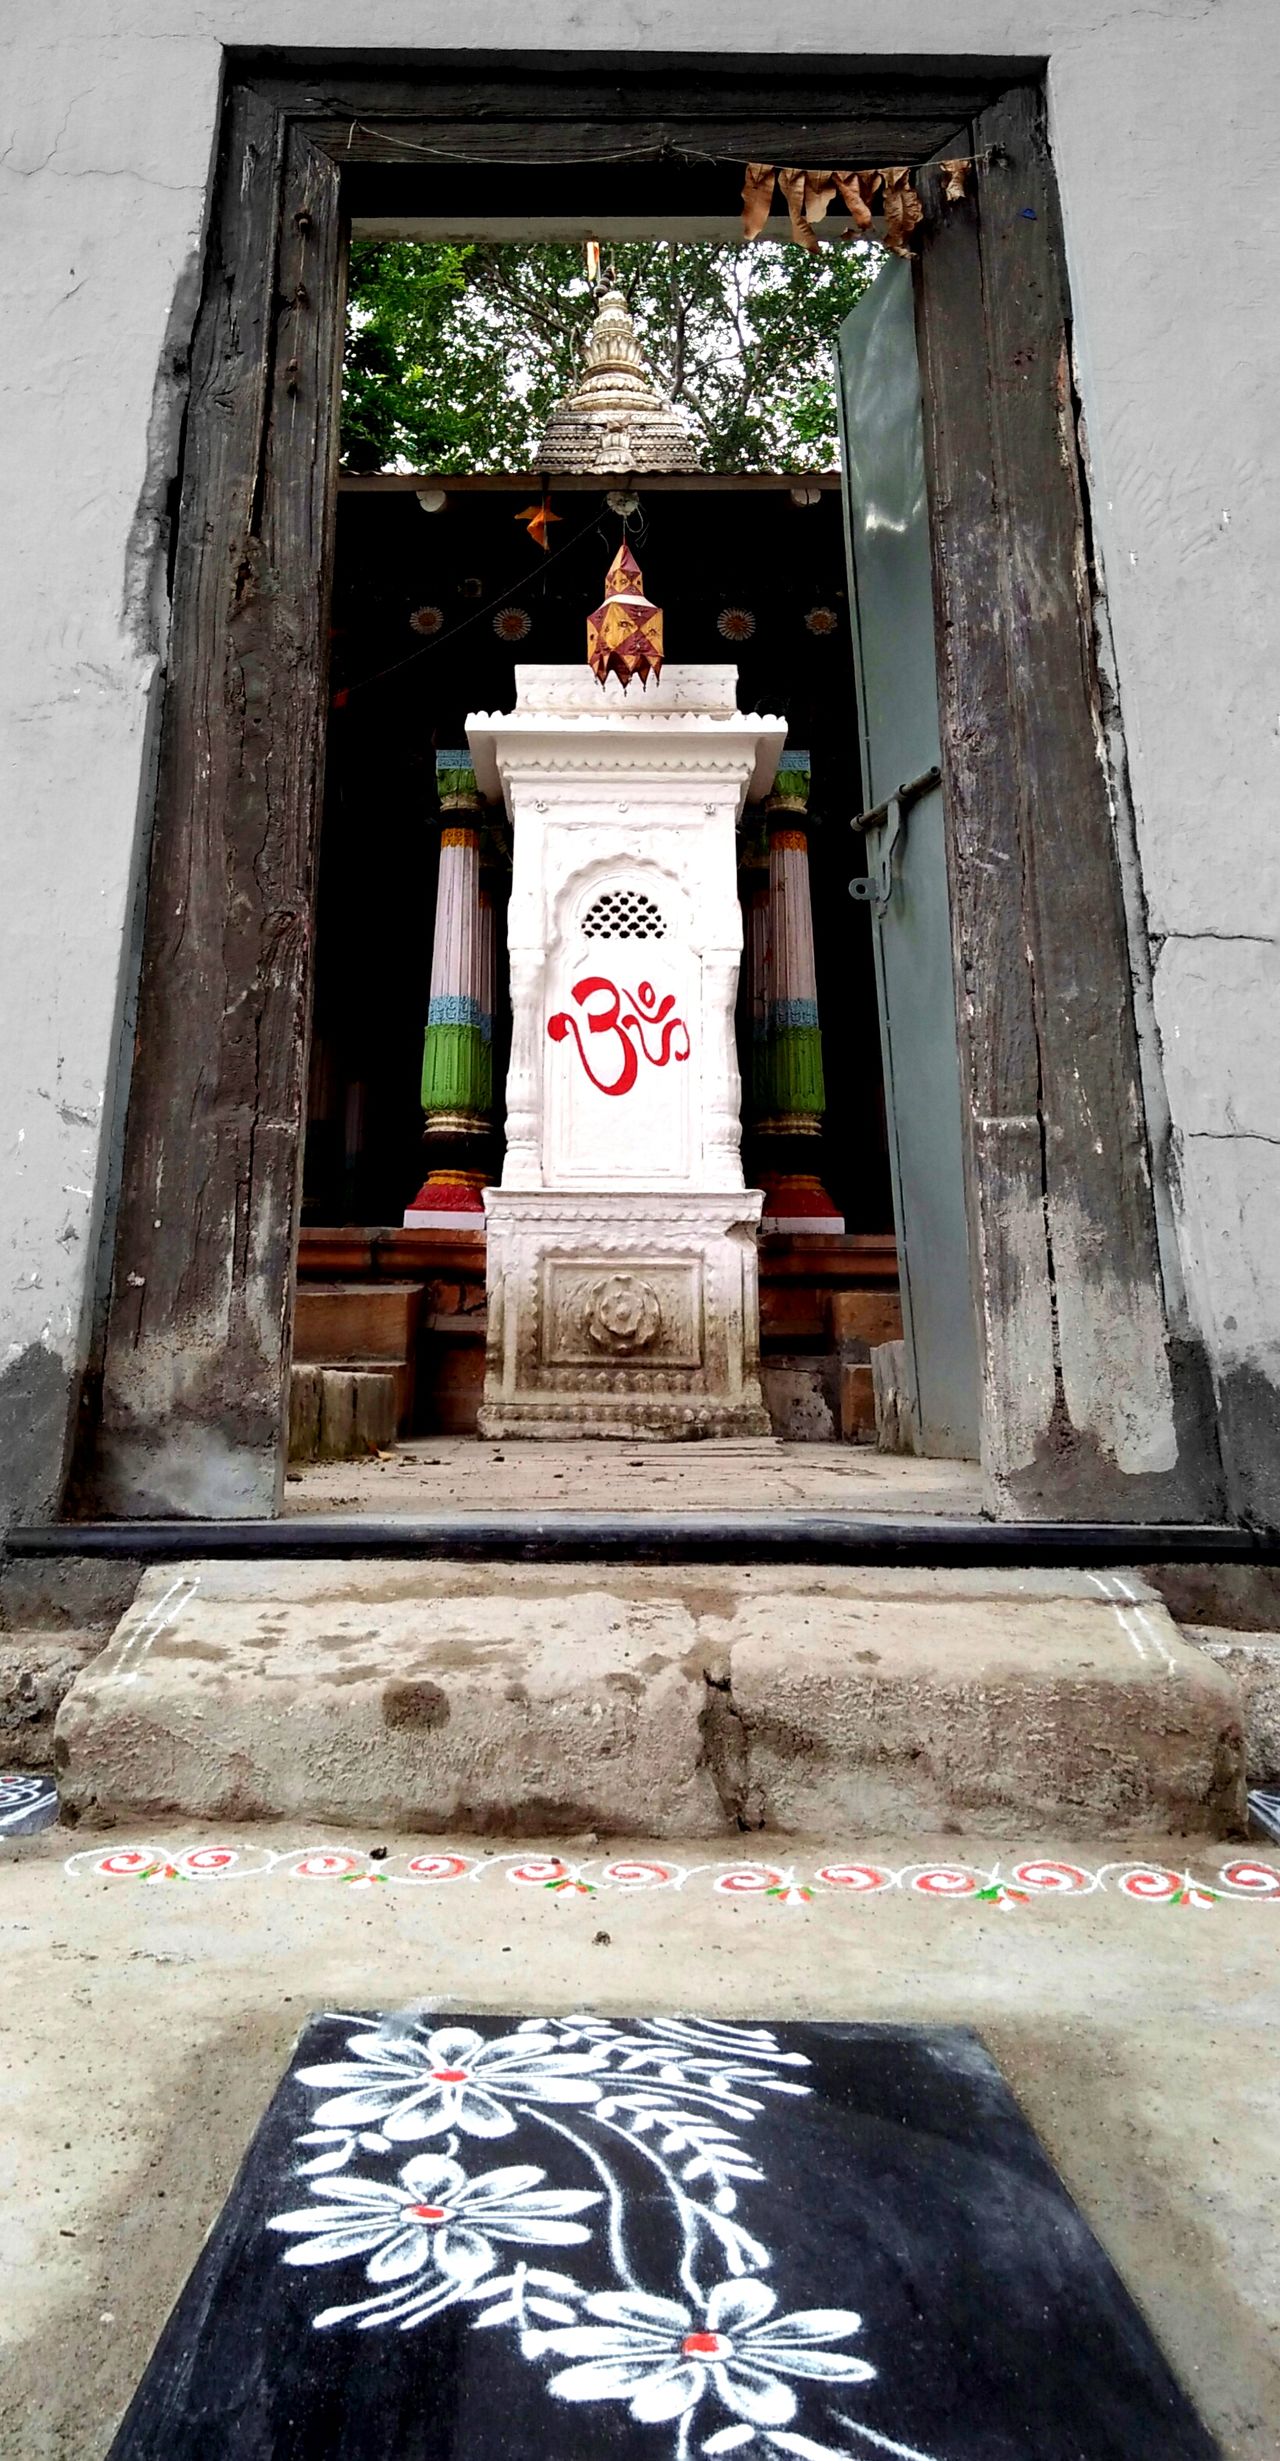 Temple in Nagpur India